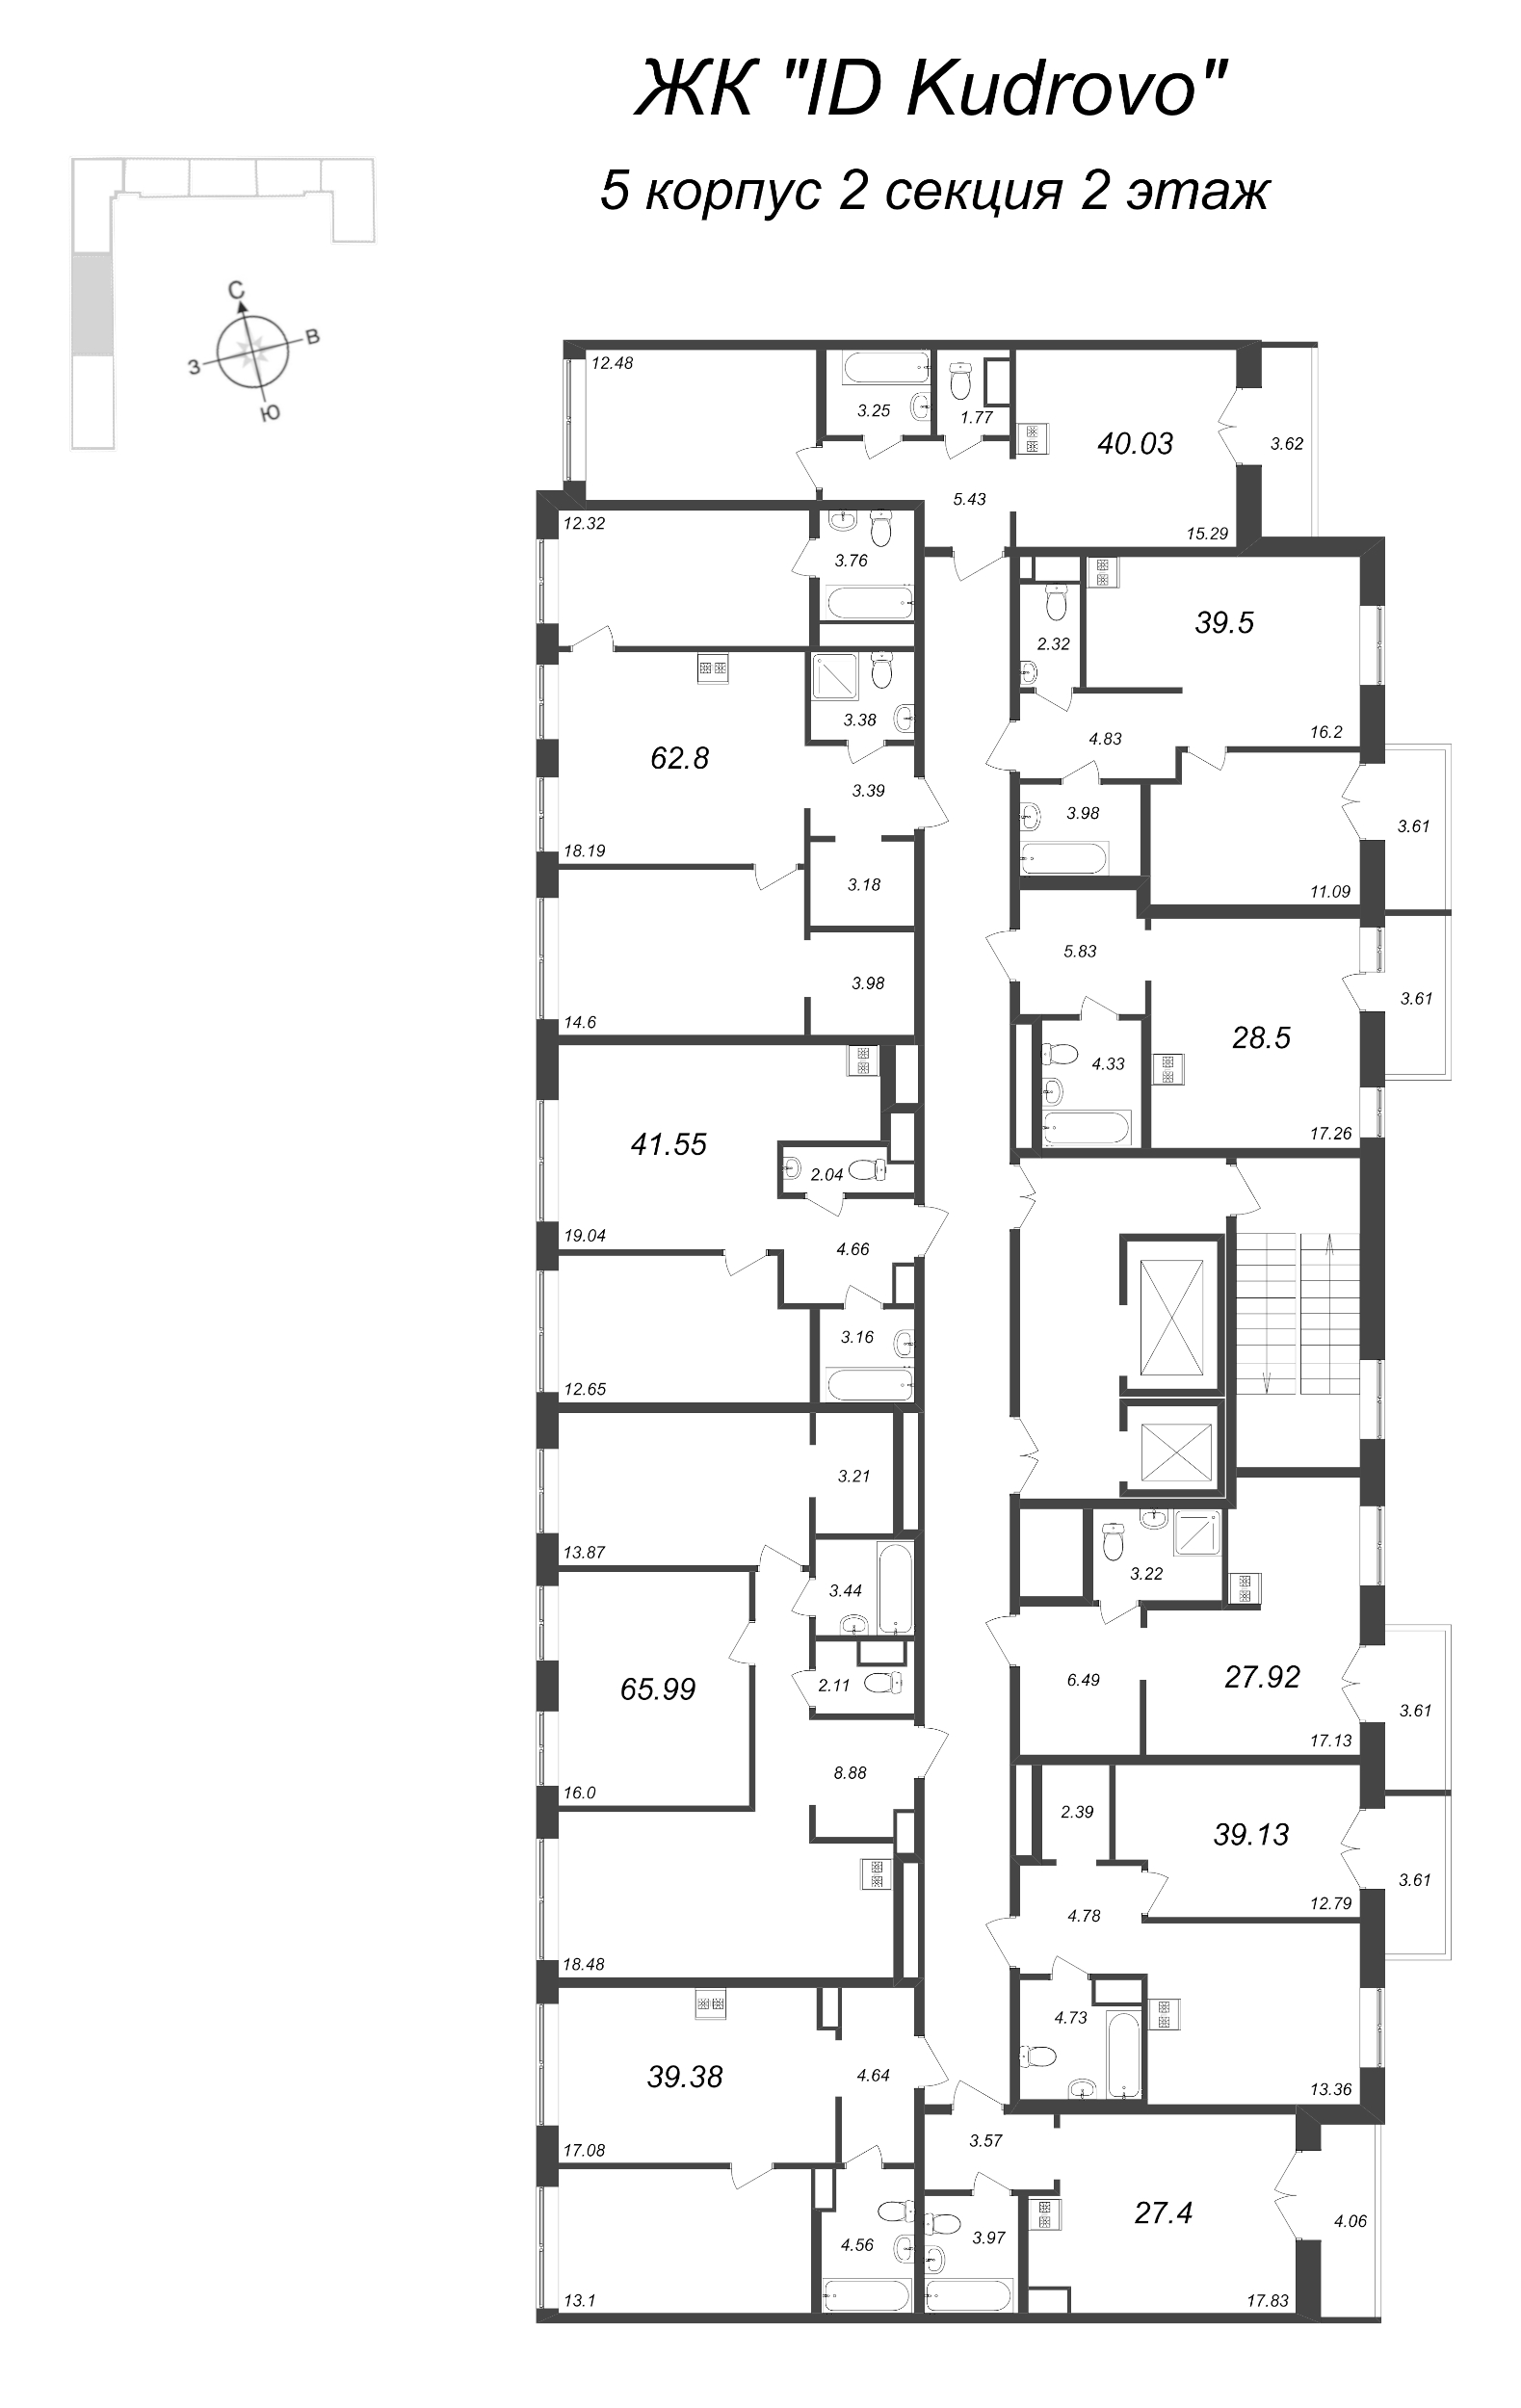 Квартира-студия, 27.4 м² в ЖК "ID Kudrovo" - планировка этажа